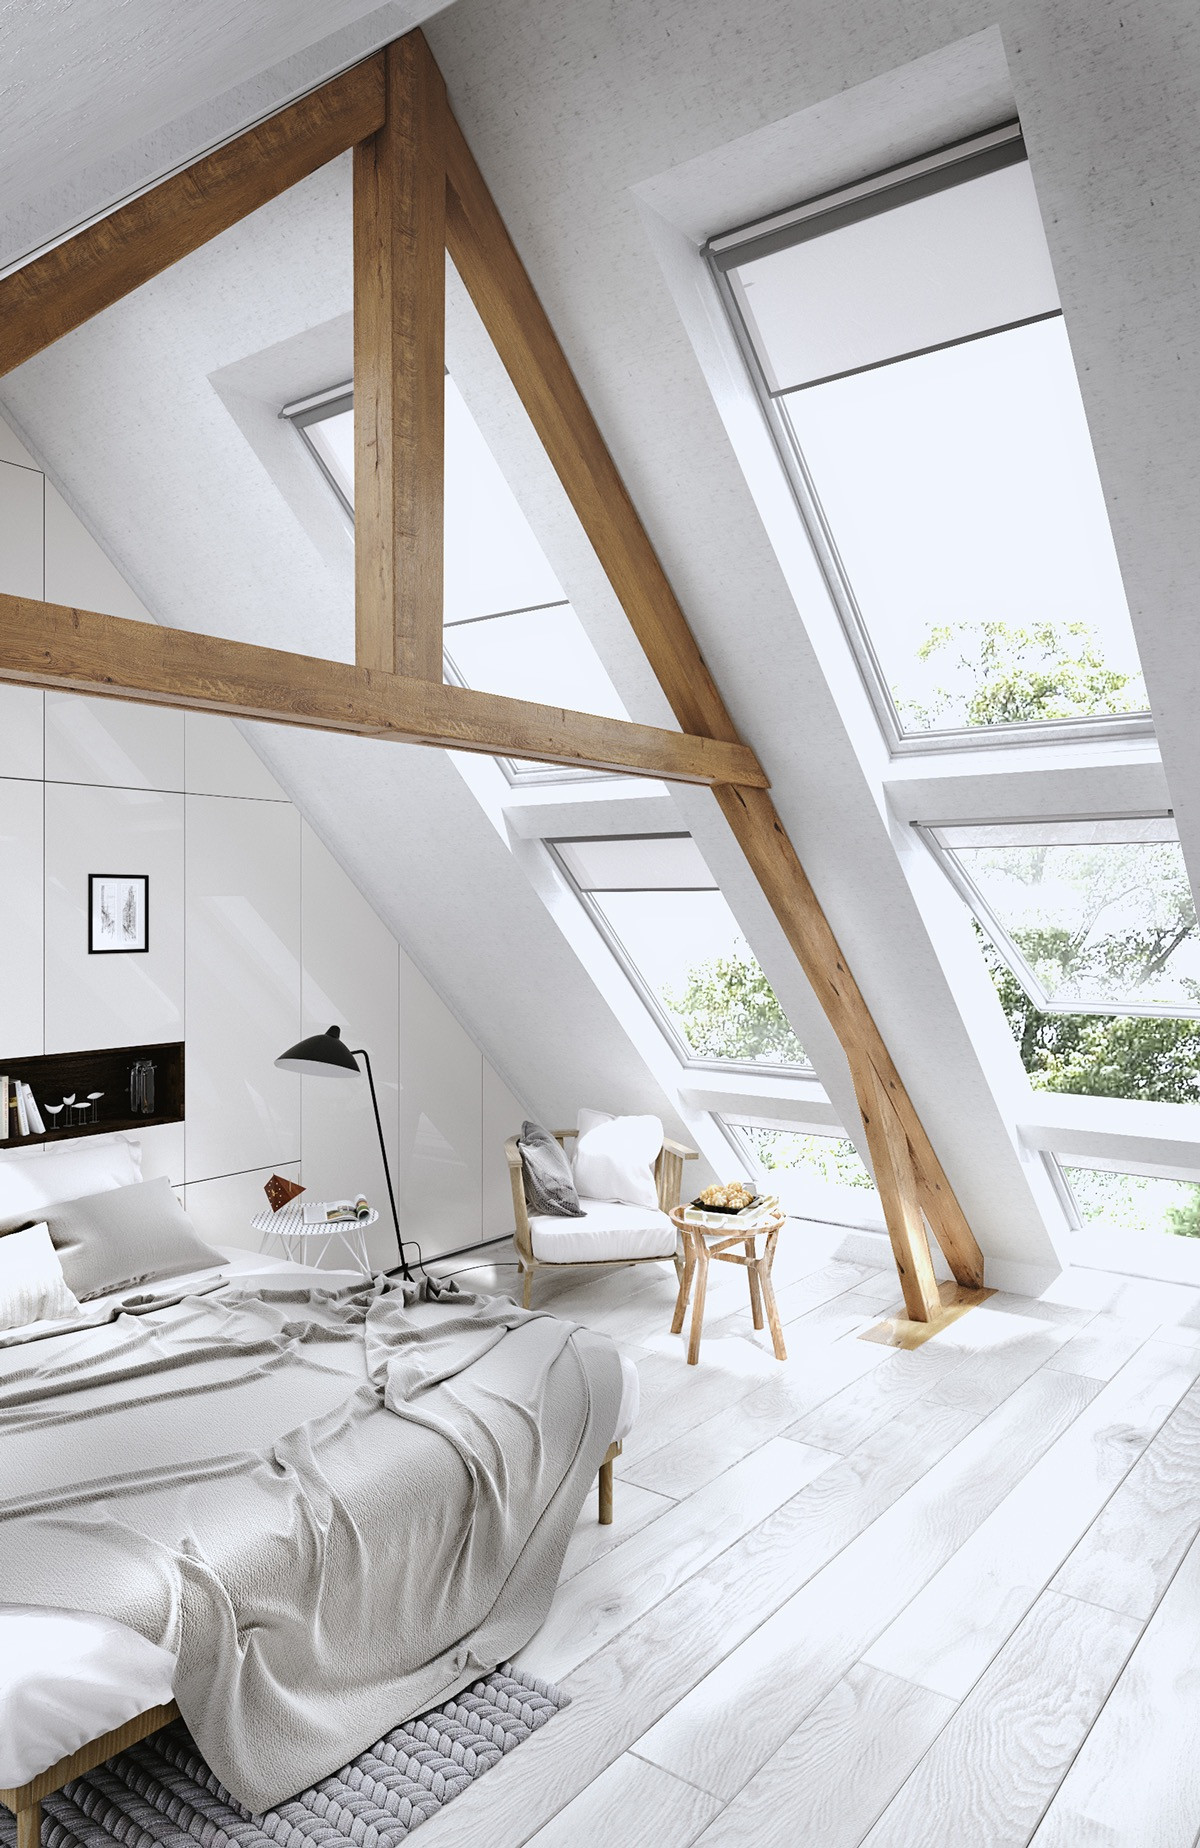 Attic Master Bedroom Ideas
 Stunning Attic Bedrooms That You Will Love – Master